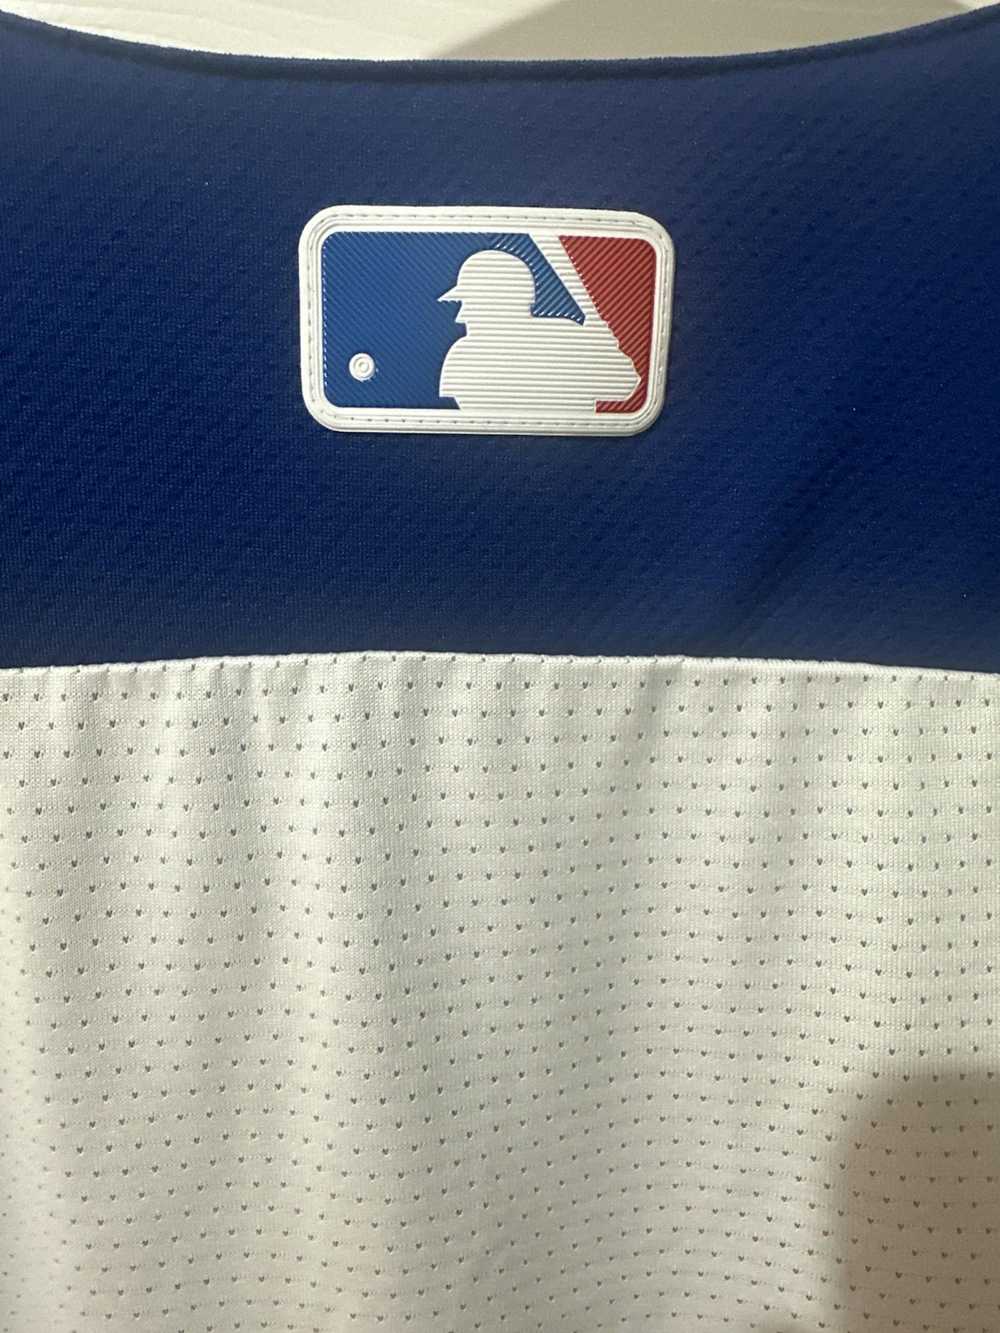 MLB LA Dodgers jersey - image 4